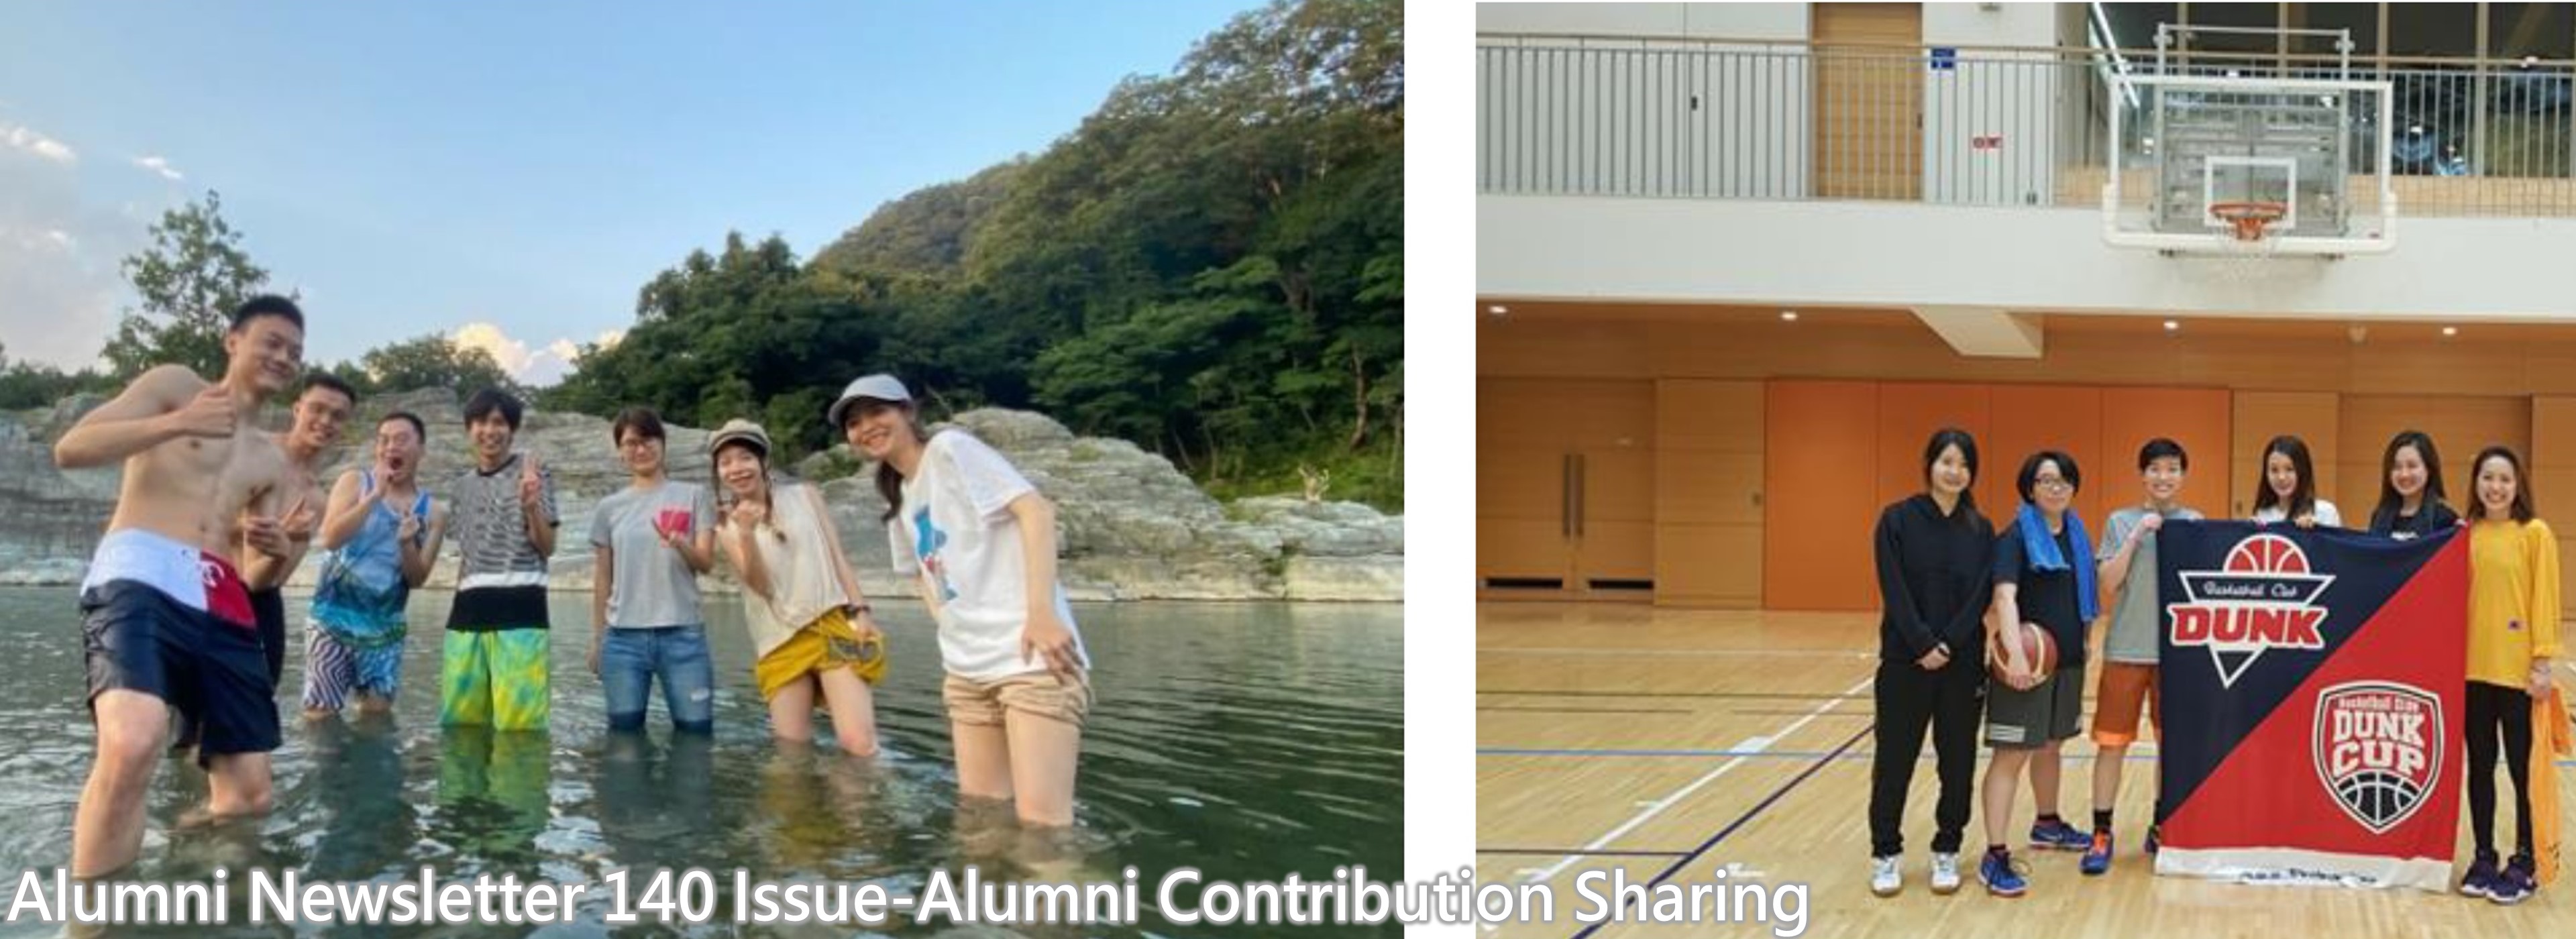 Alumni Newsletter 140 Issue-Alumni Contribution Sharing